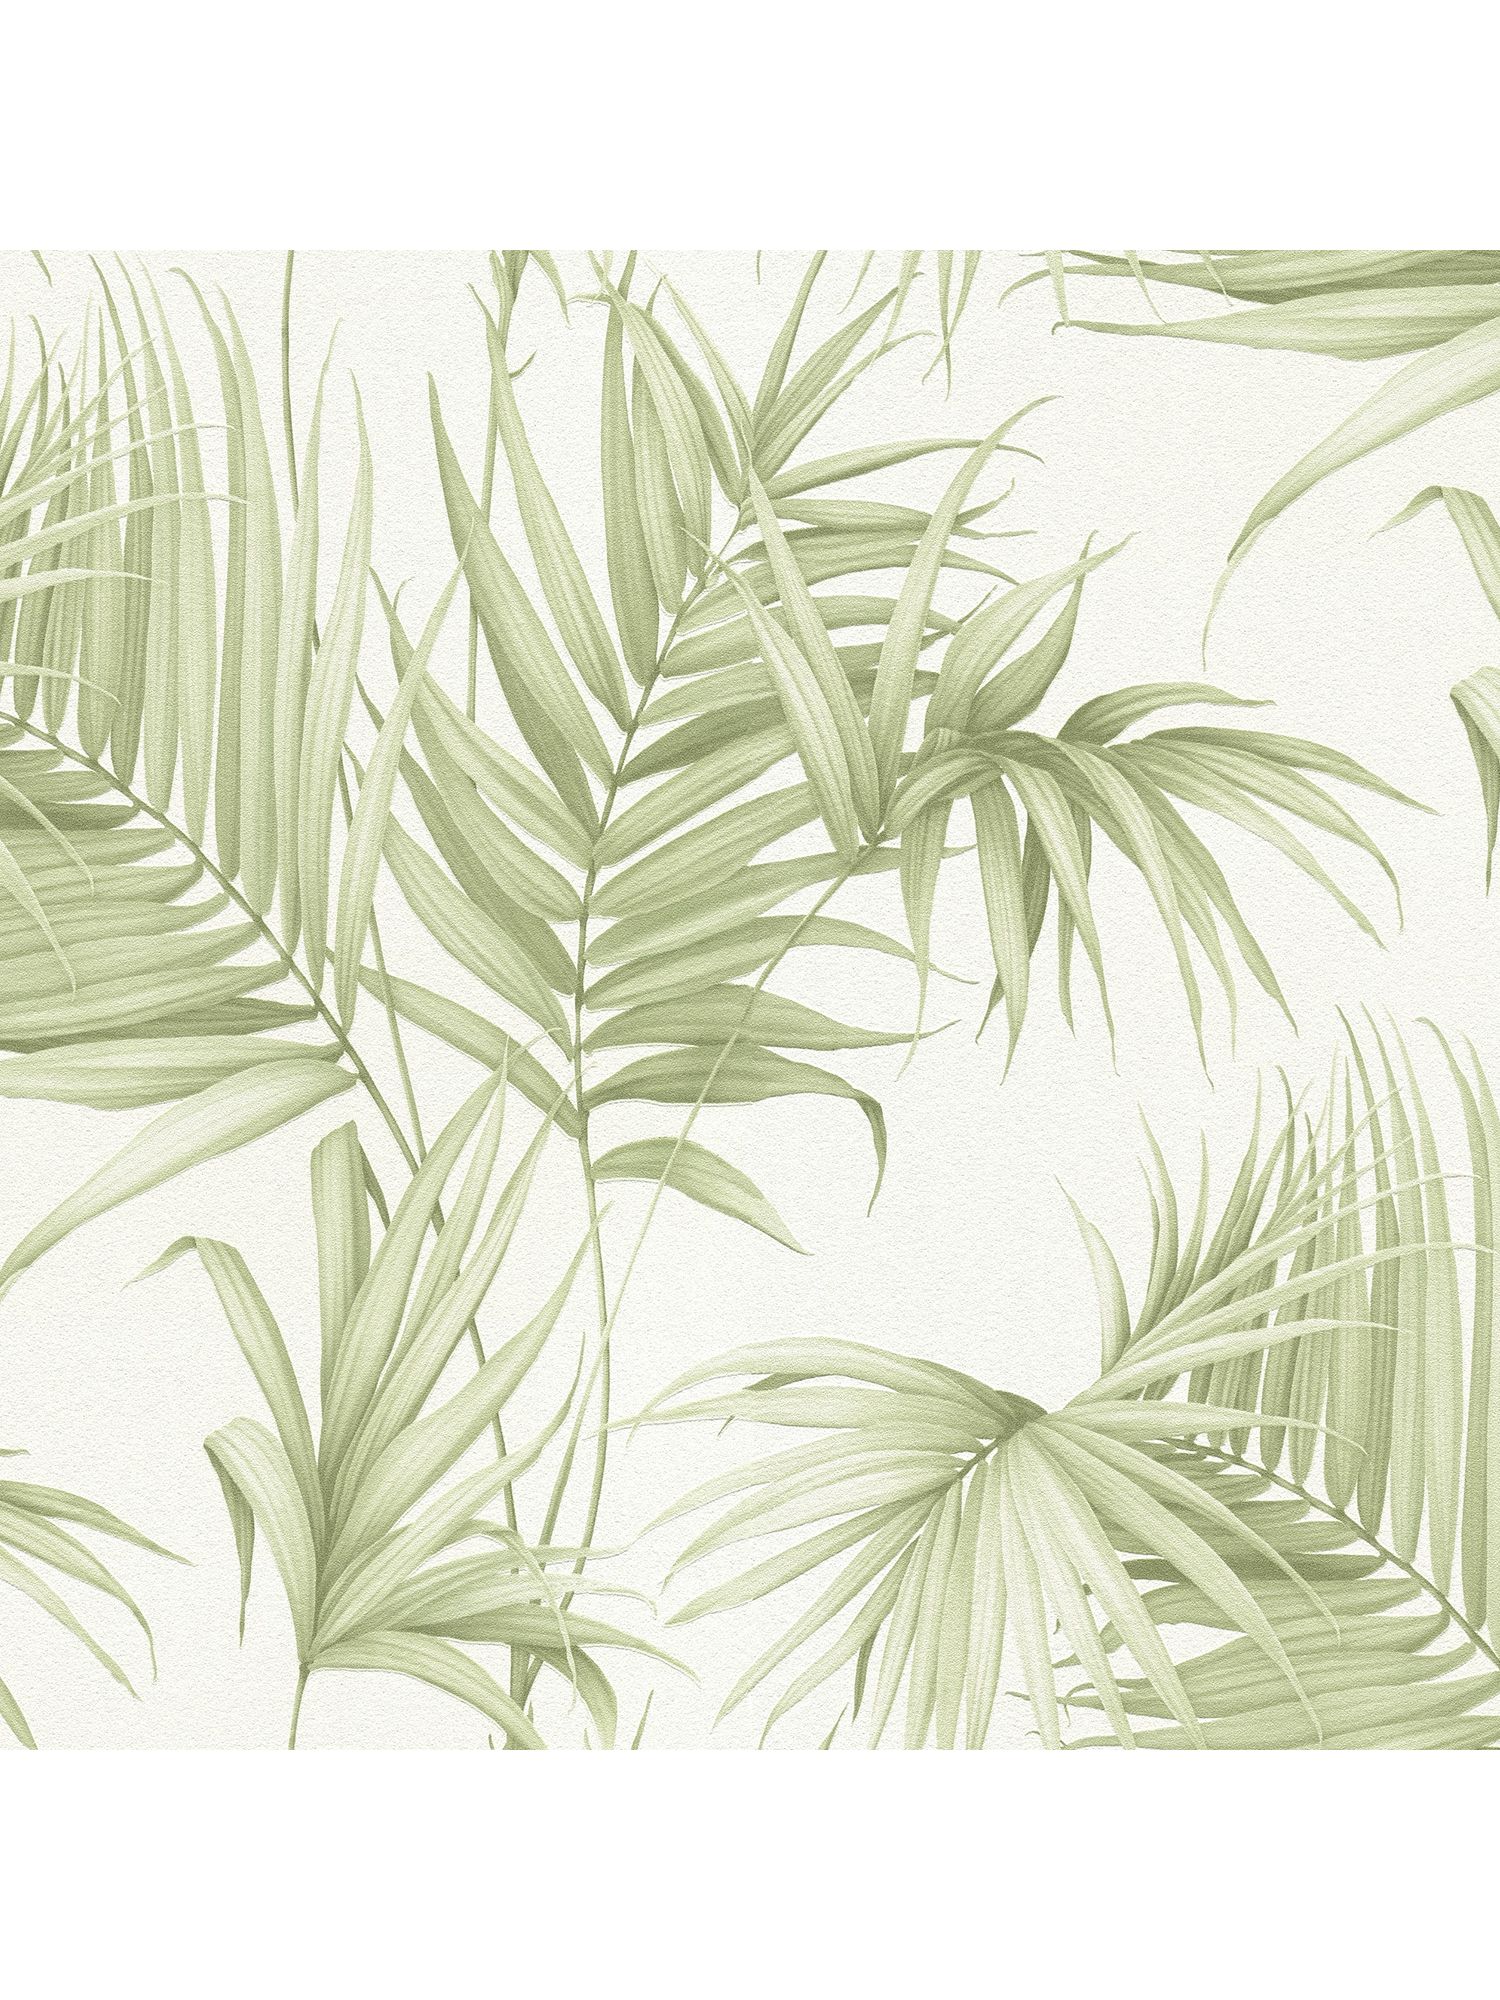 Galerie Palm Leaves Vinyl Wallpaper at John Lewis & Partners